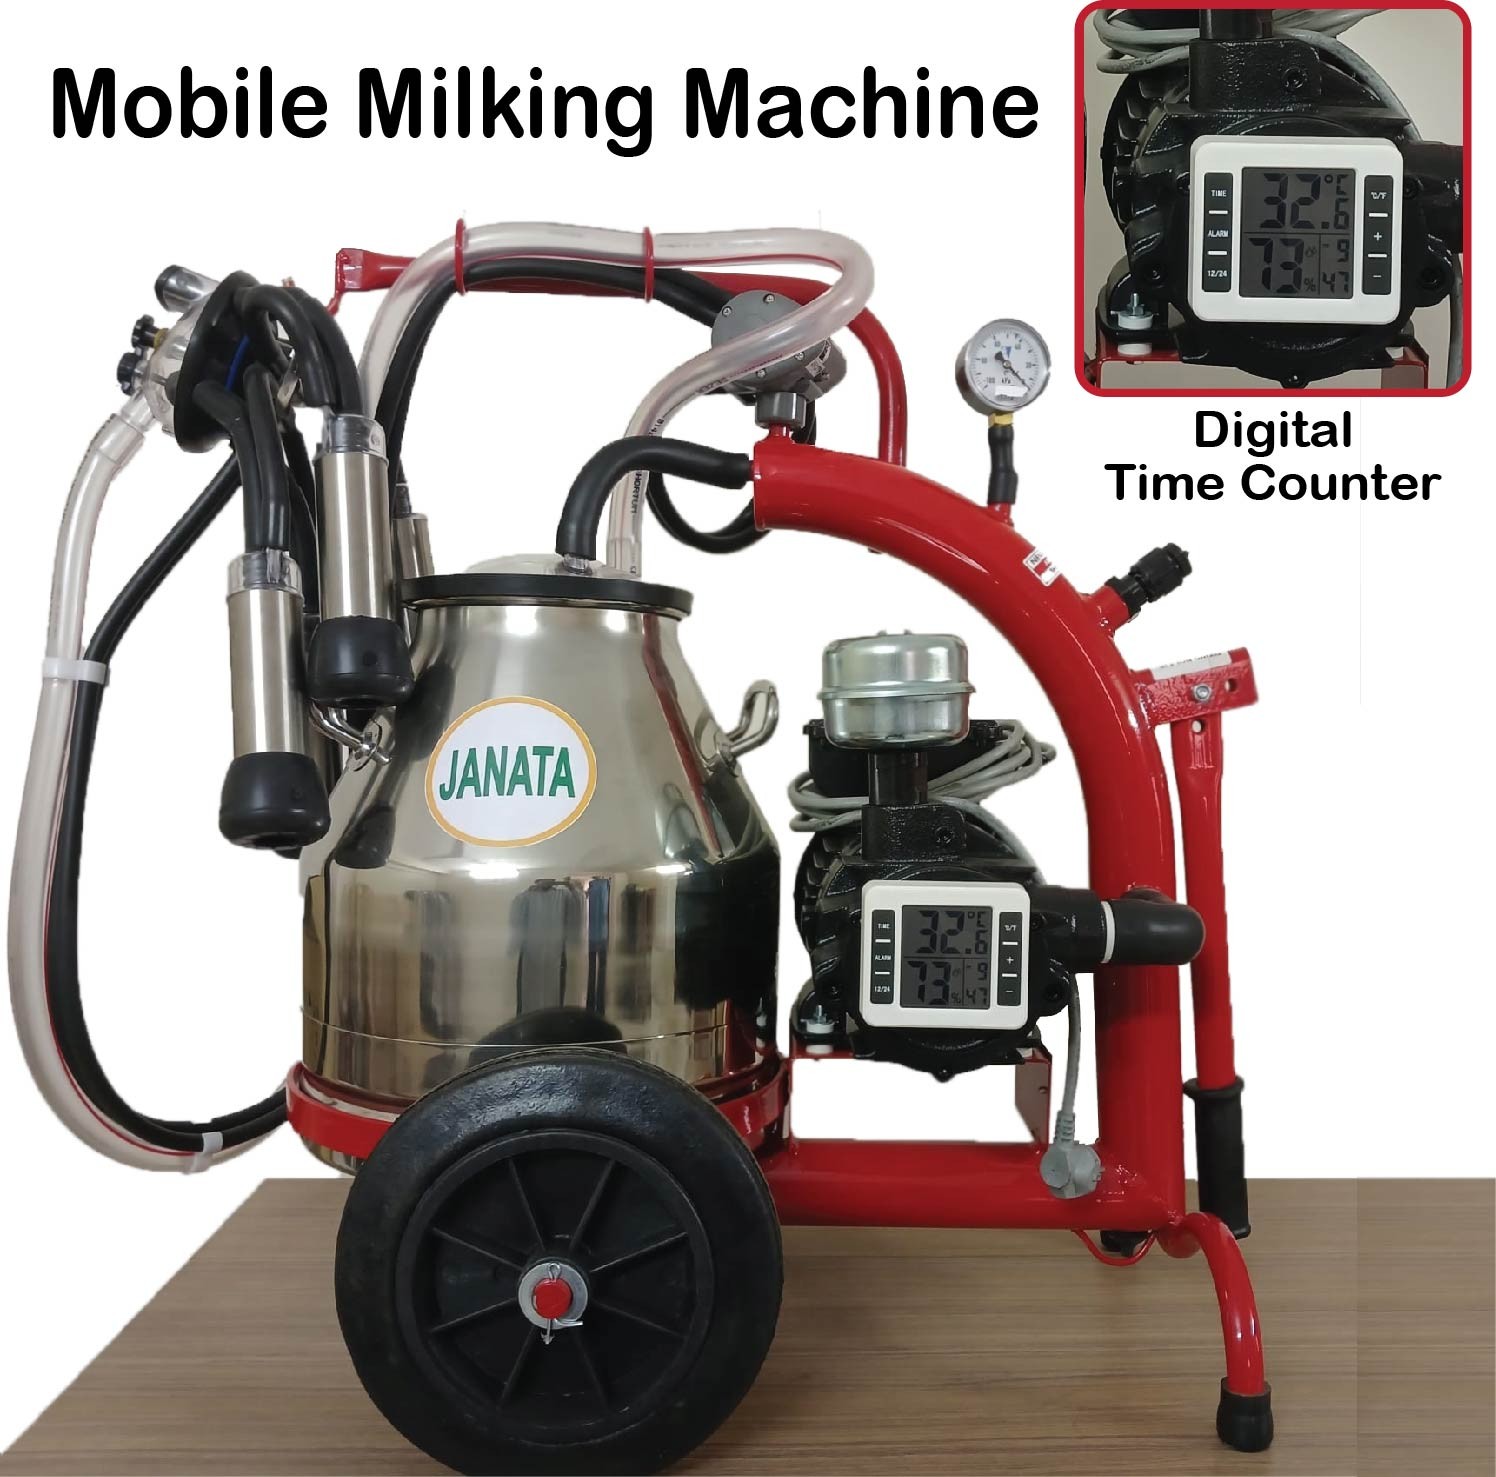 Mobile Milking Machine